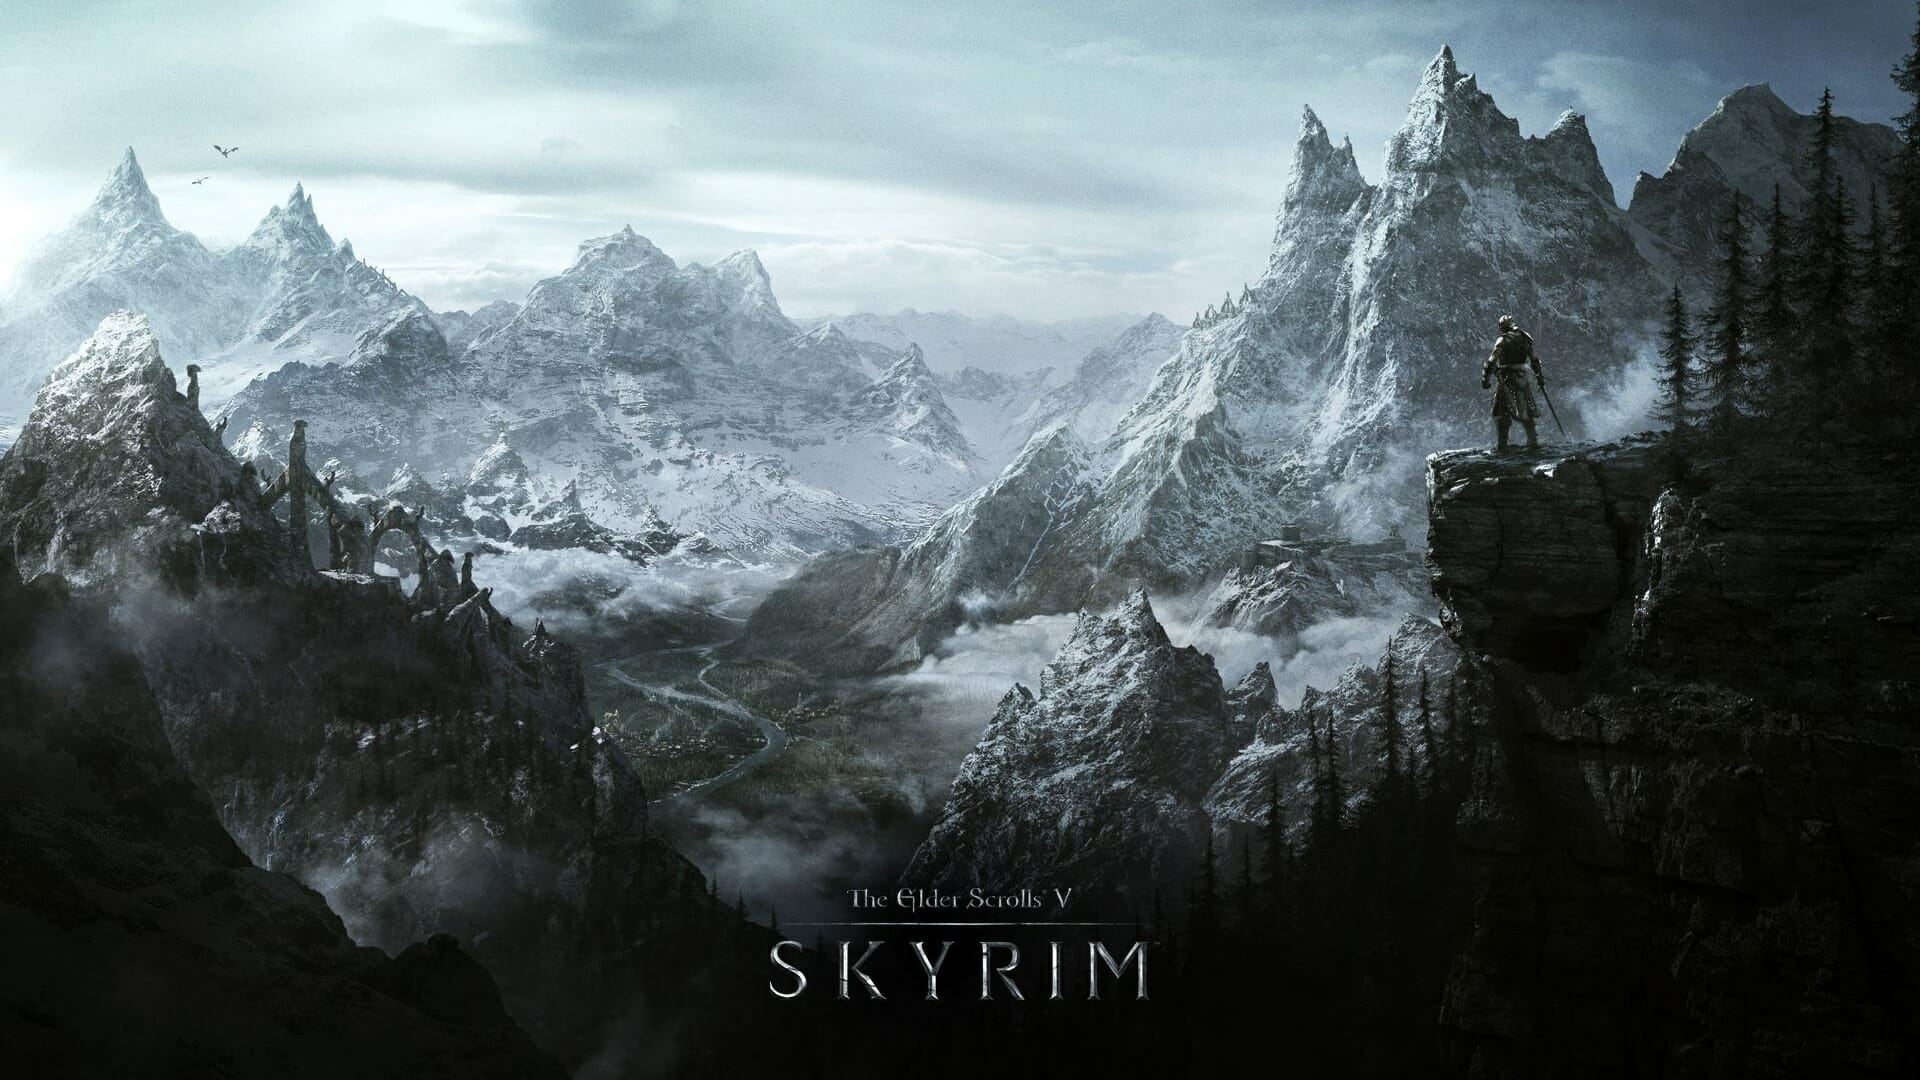 Who hasn't met The Elder Scrolls V: Skyrim? 